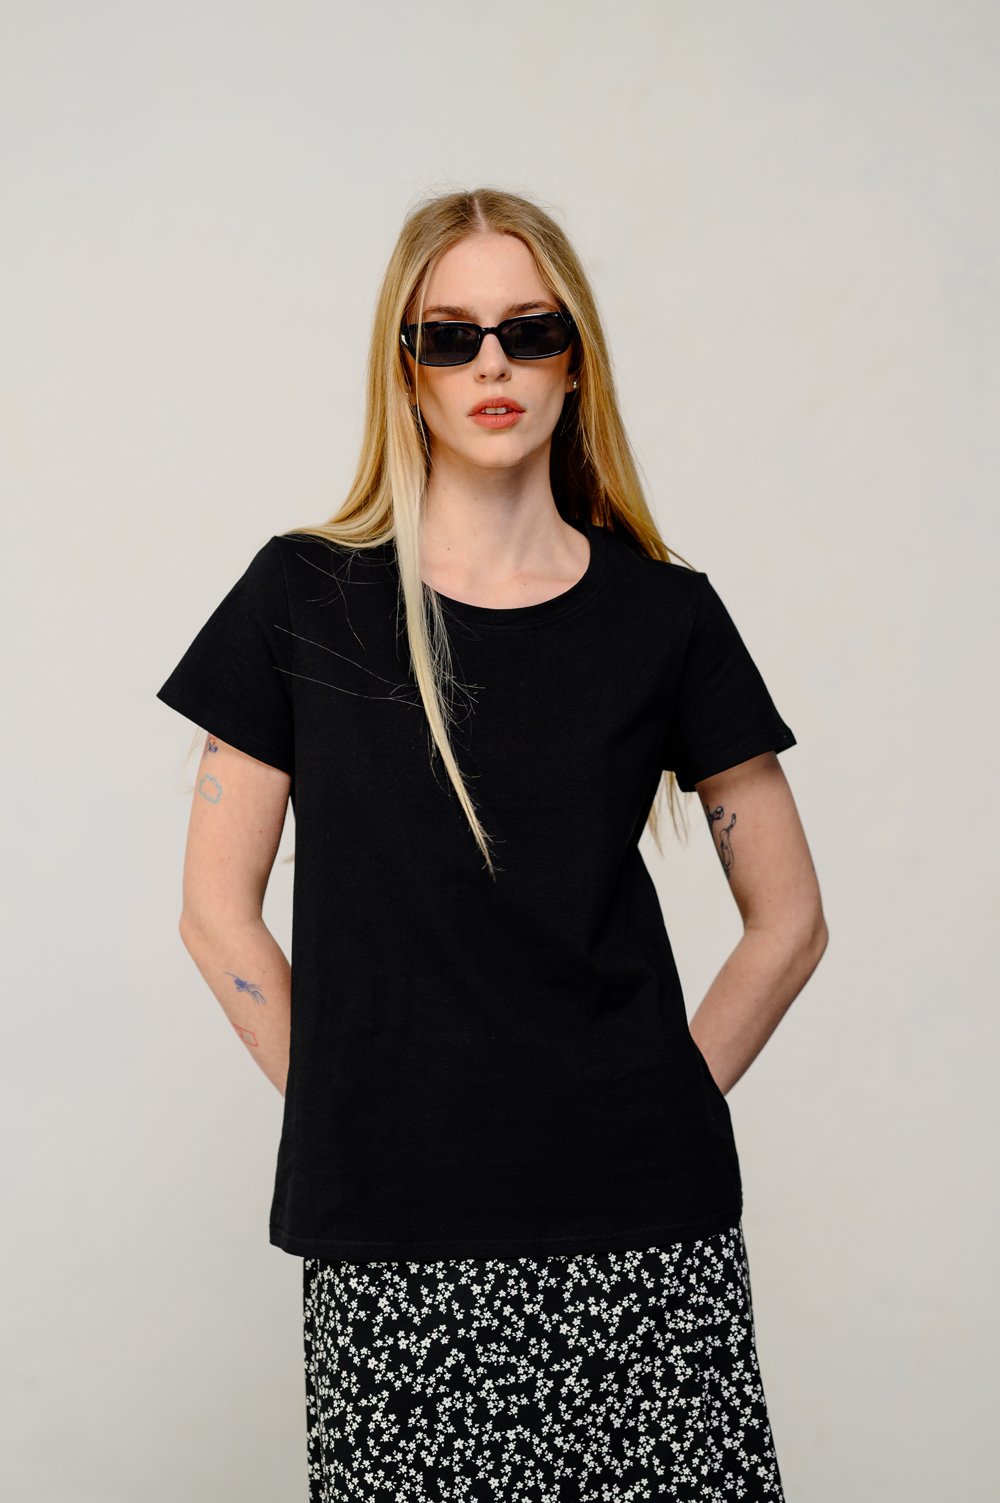 Straight-cut basic t-shirt in black